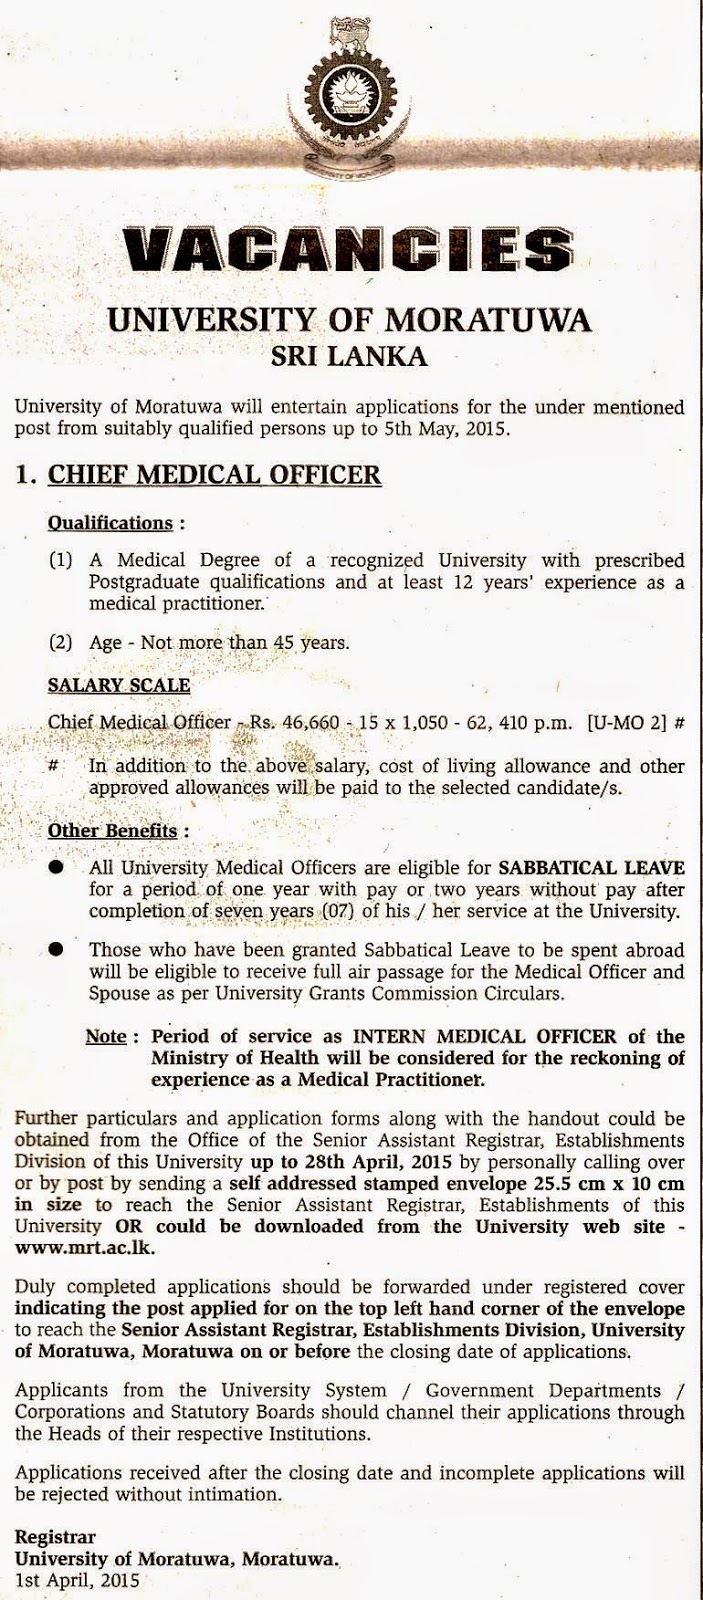 Chief Medical Officer Vacancies in University of Moratuwa